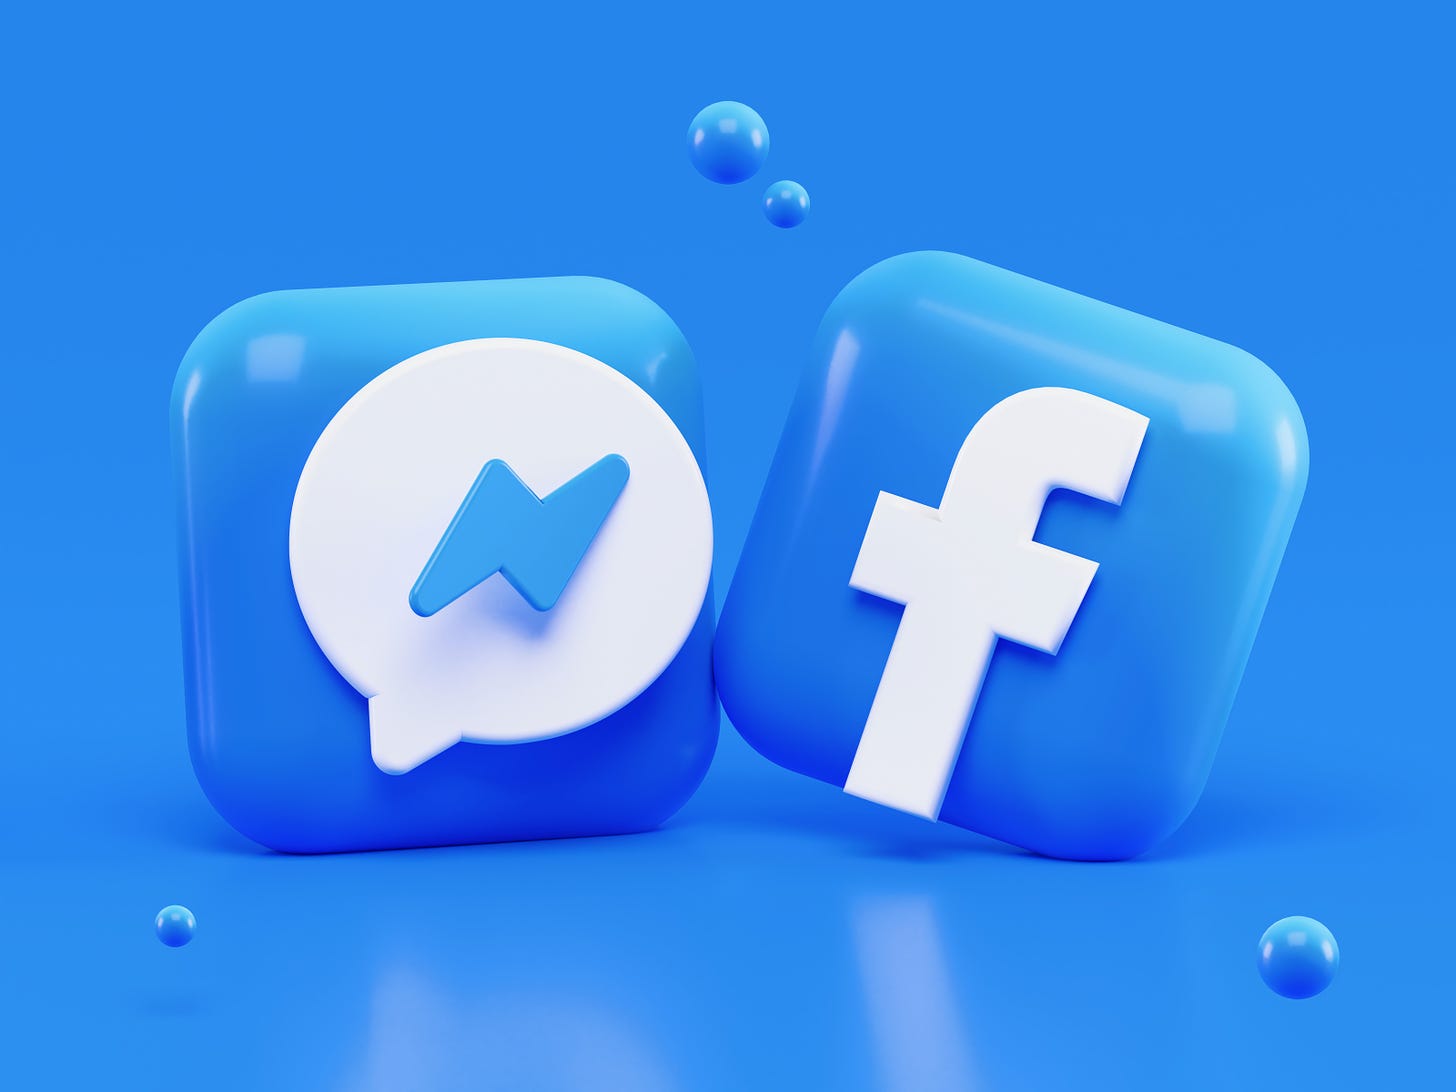 Illustration of the app icons for Messenger and Facebook side by side. Alexander Shatov / Unsplash